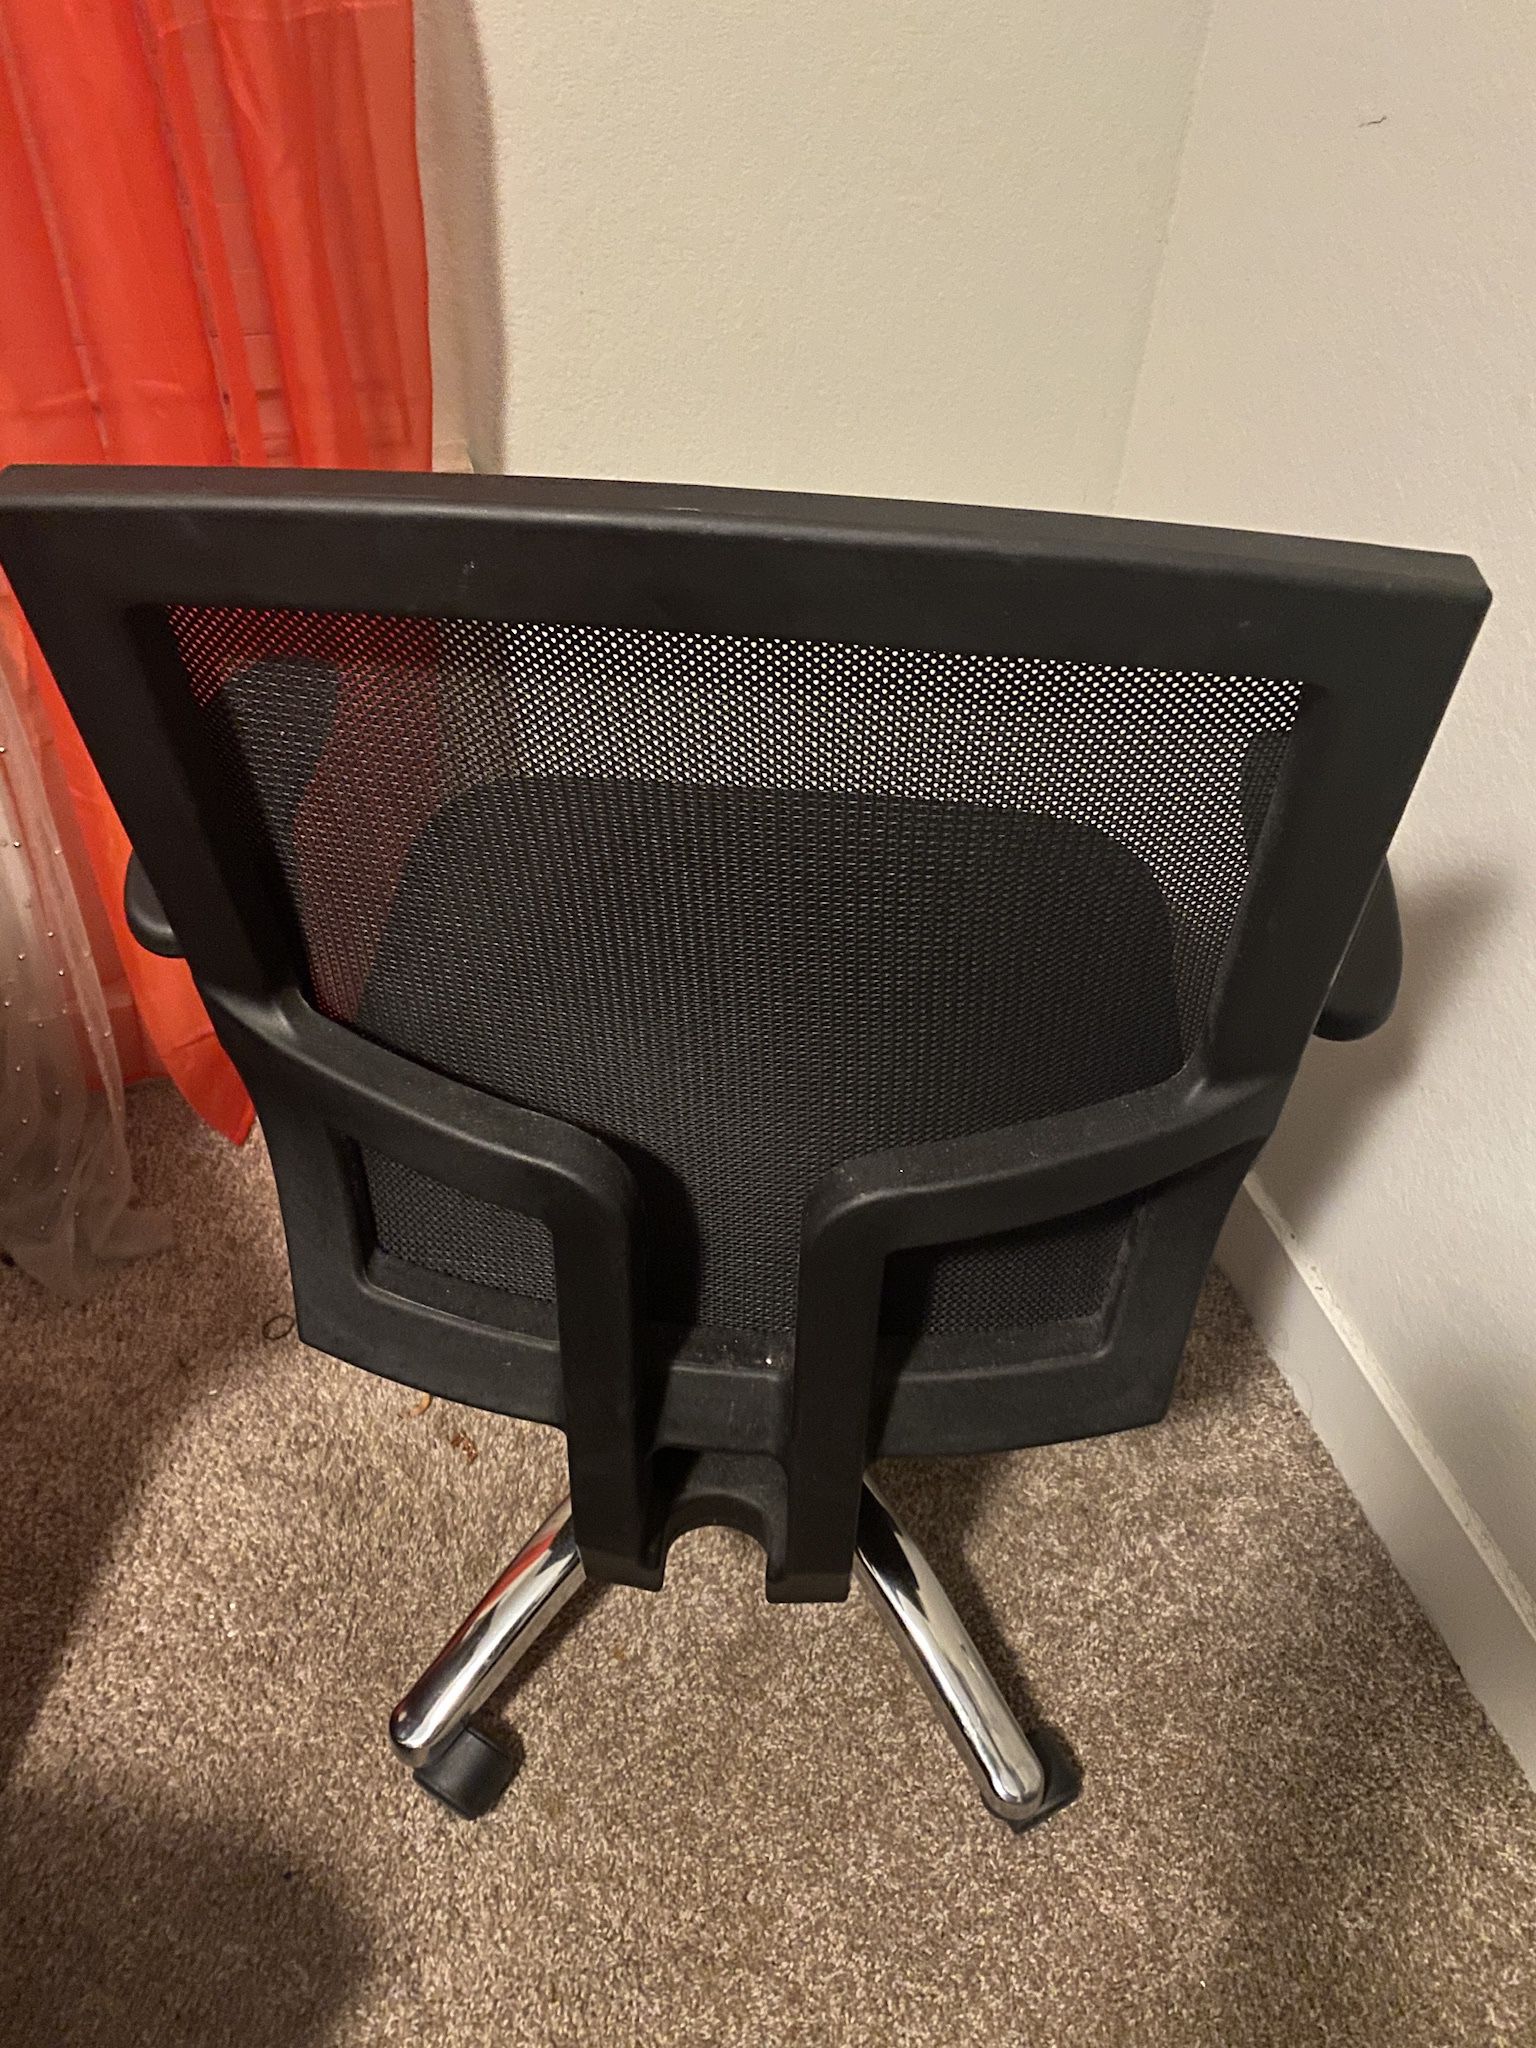 Black Desk Chair 